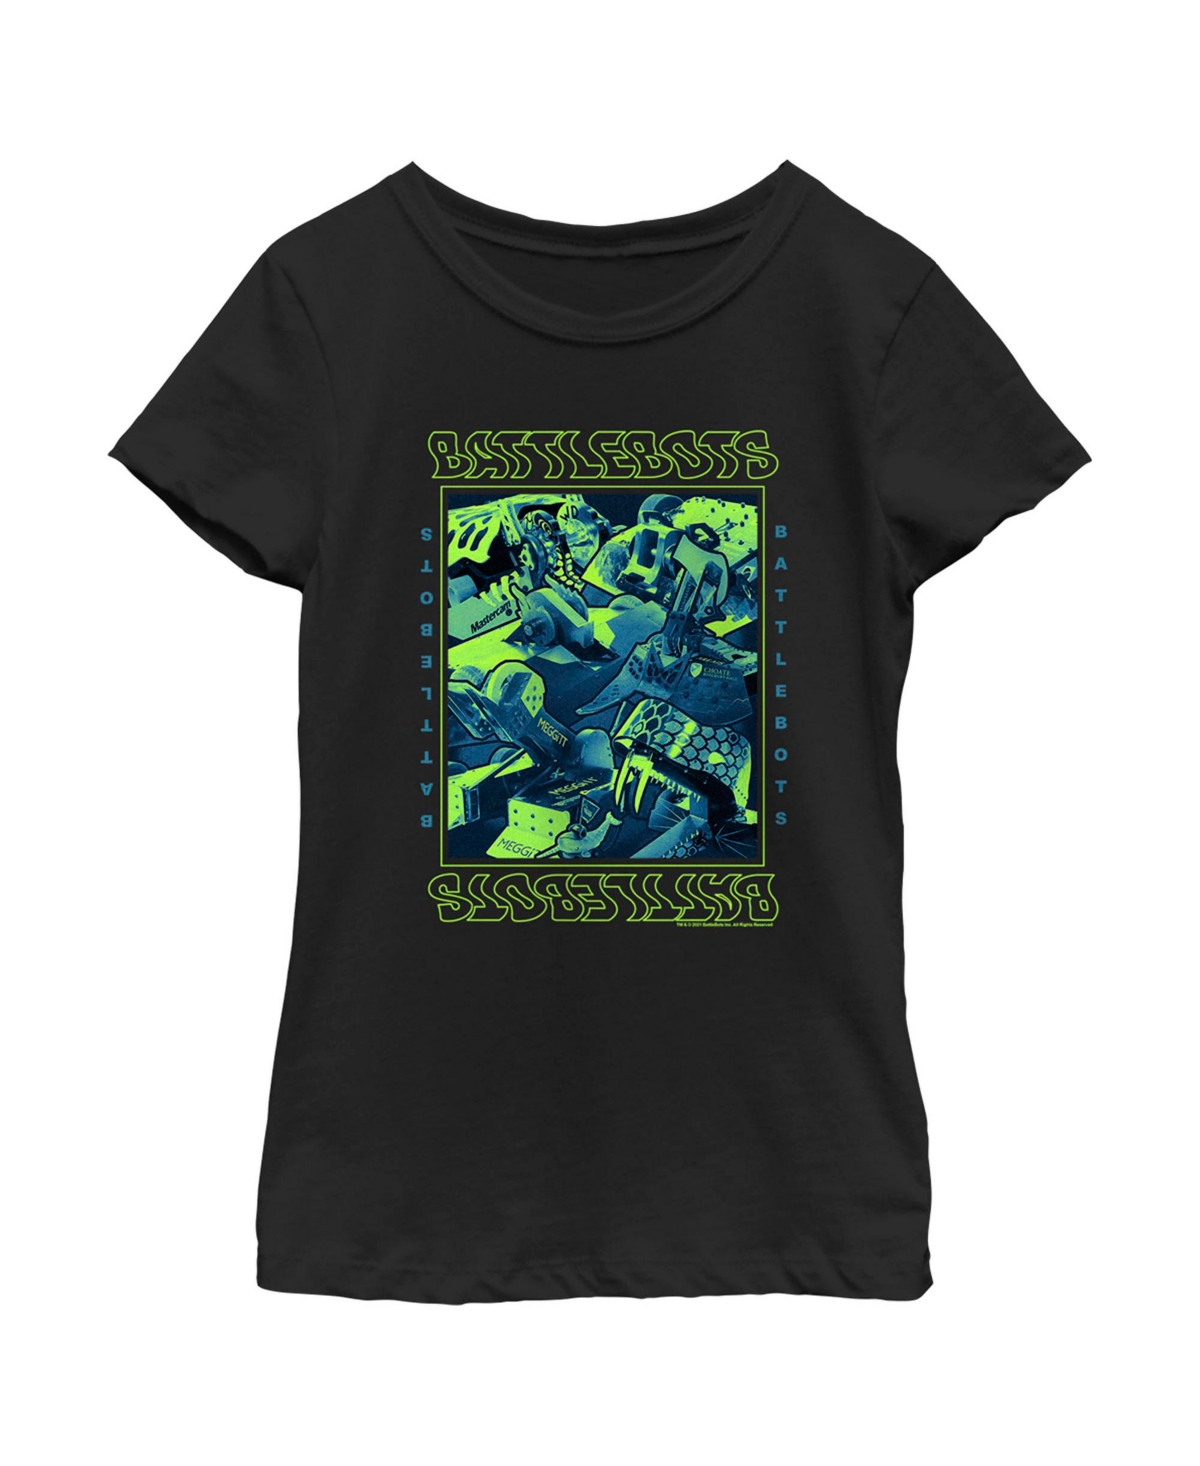 Battlebots Girl's  Retro Robot Collage Child T-shirt In Black